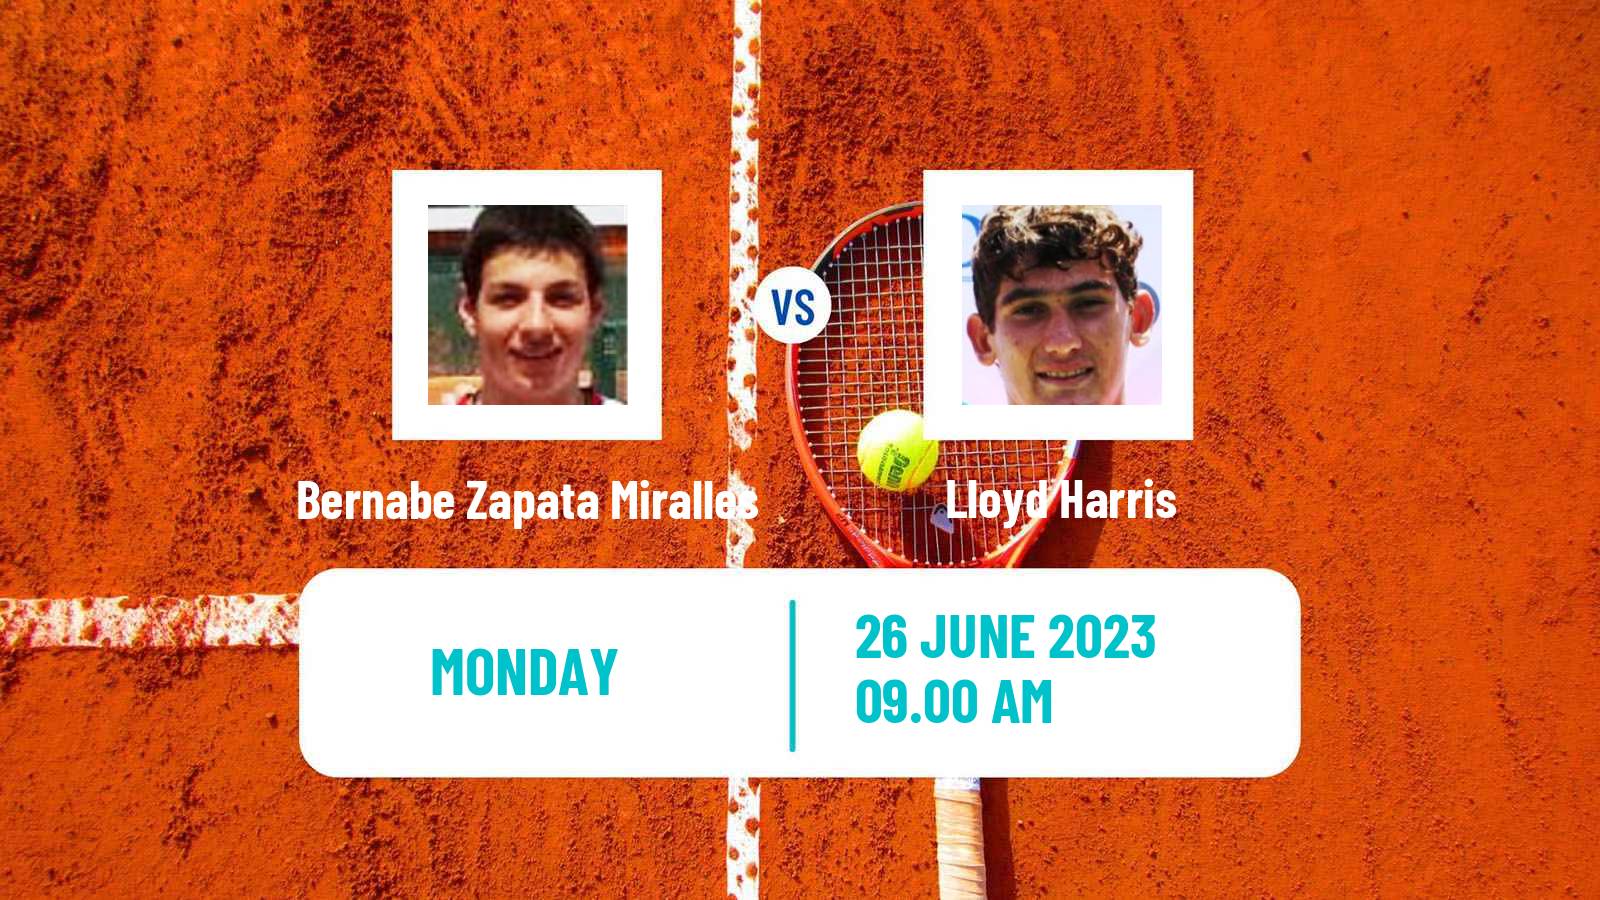 Tennis ATP Mallorca Bernabe Zapata Miralles - Lloyd Harris